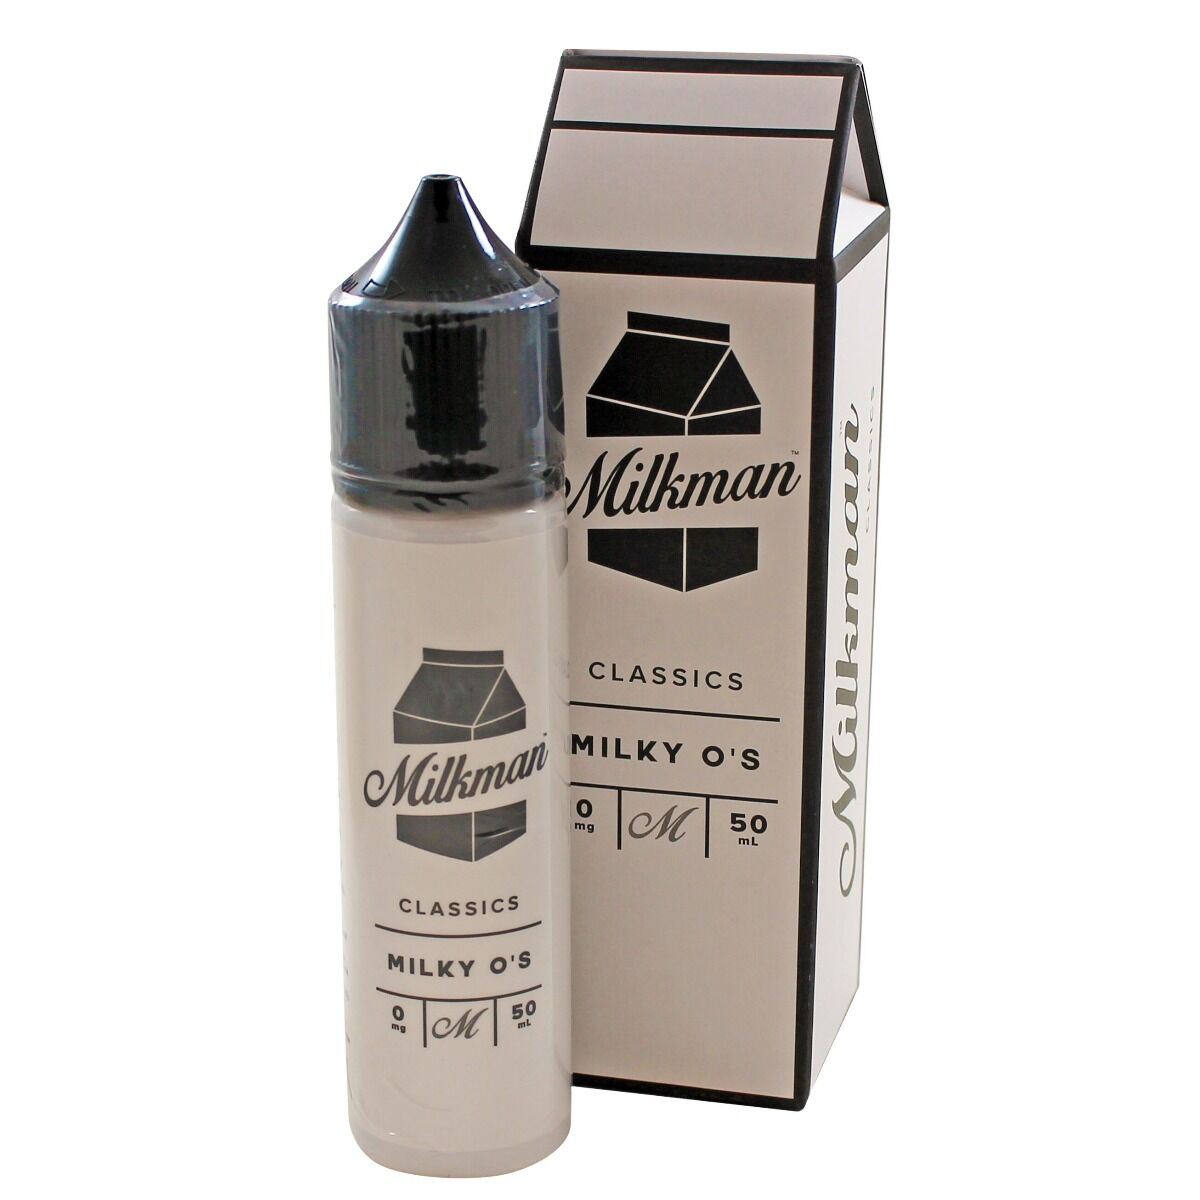 The Milkman Milky O's 50ml Shortfill E-Liquid